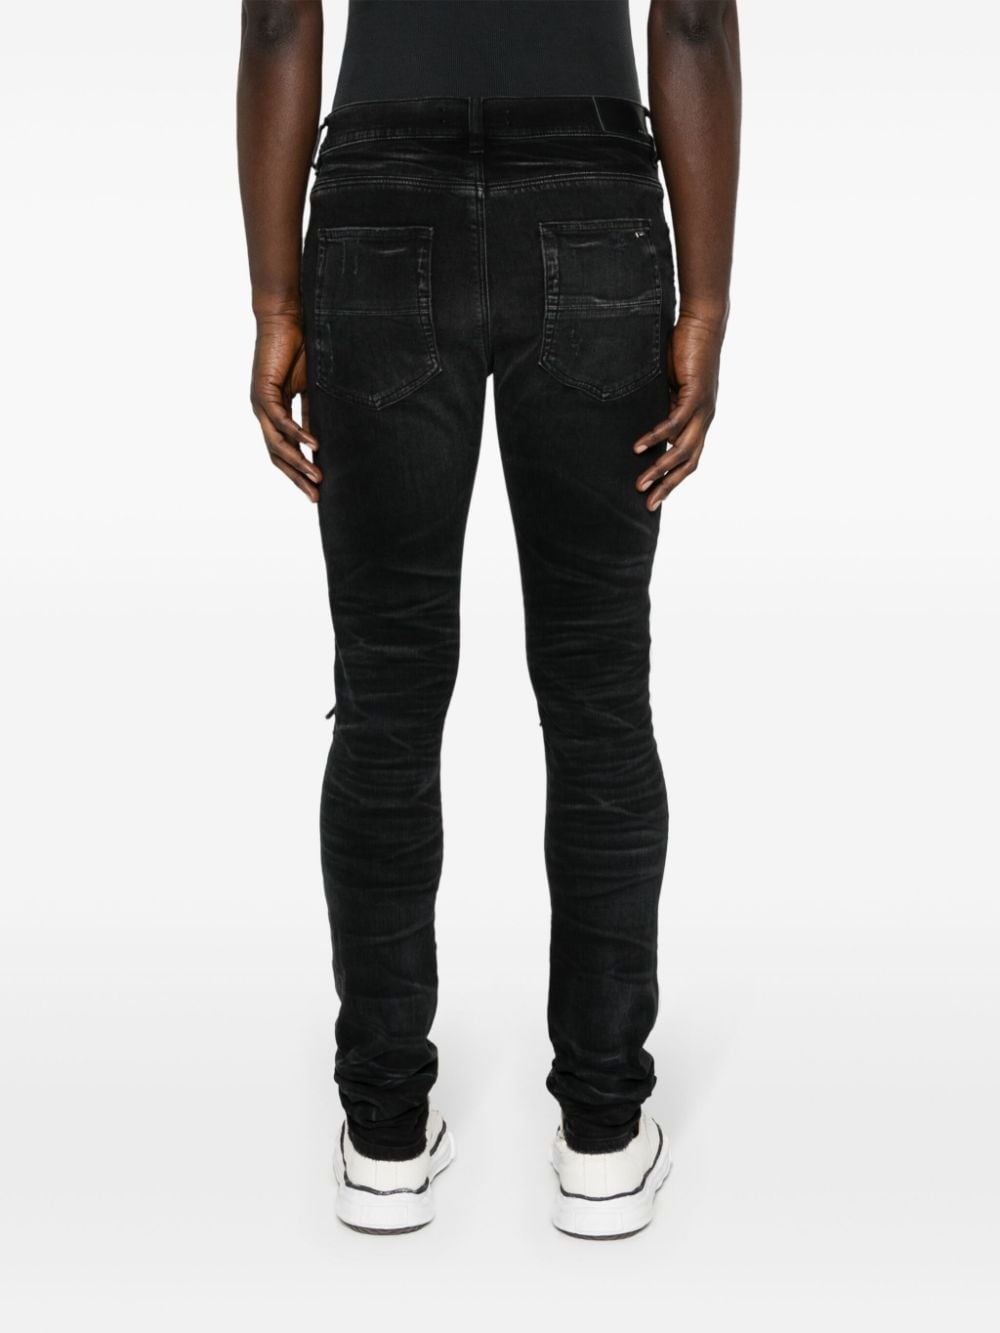 Plaid MX1 mid-rise skinny jeans - 4